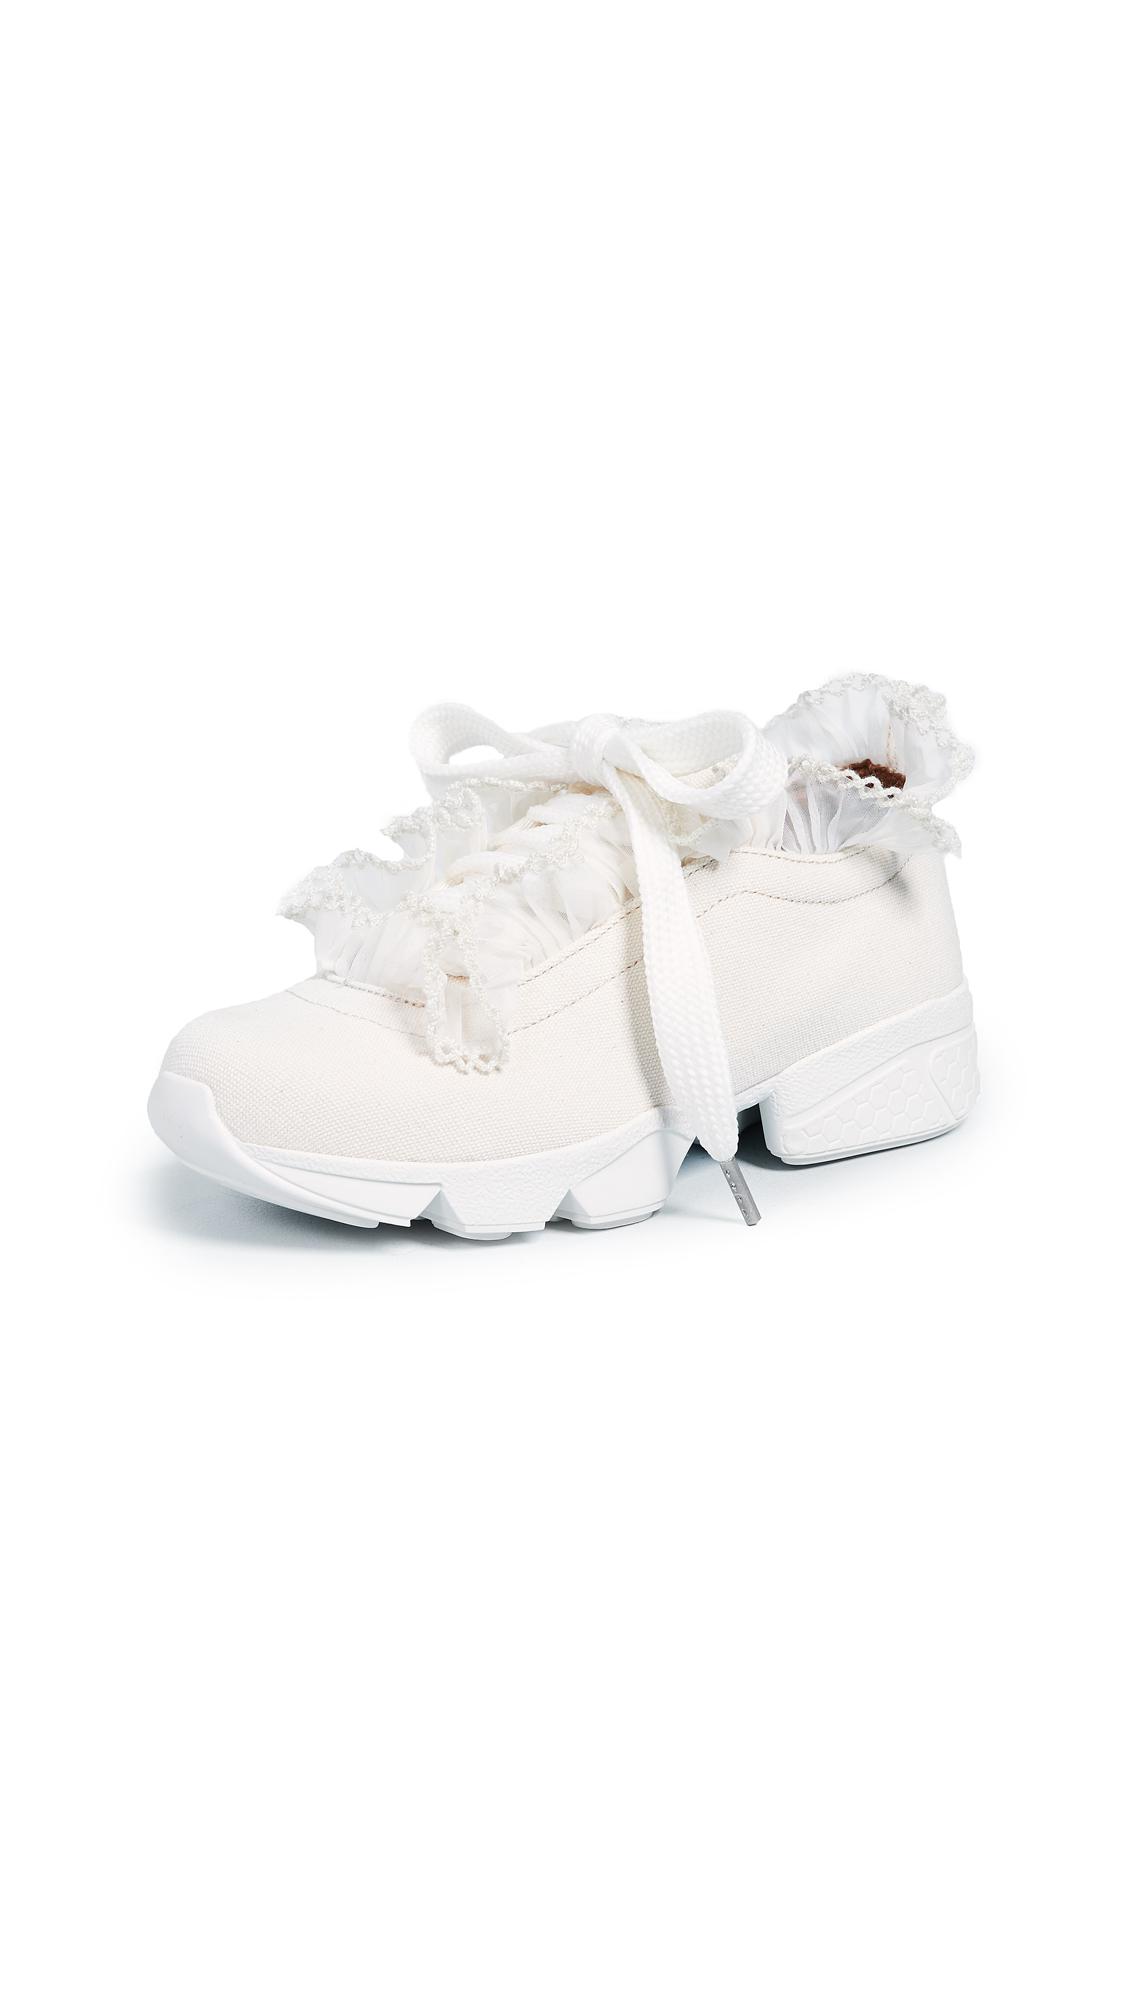 Ganni Canvas Harriet Sneakers in White - Lyst